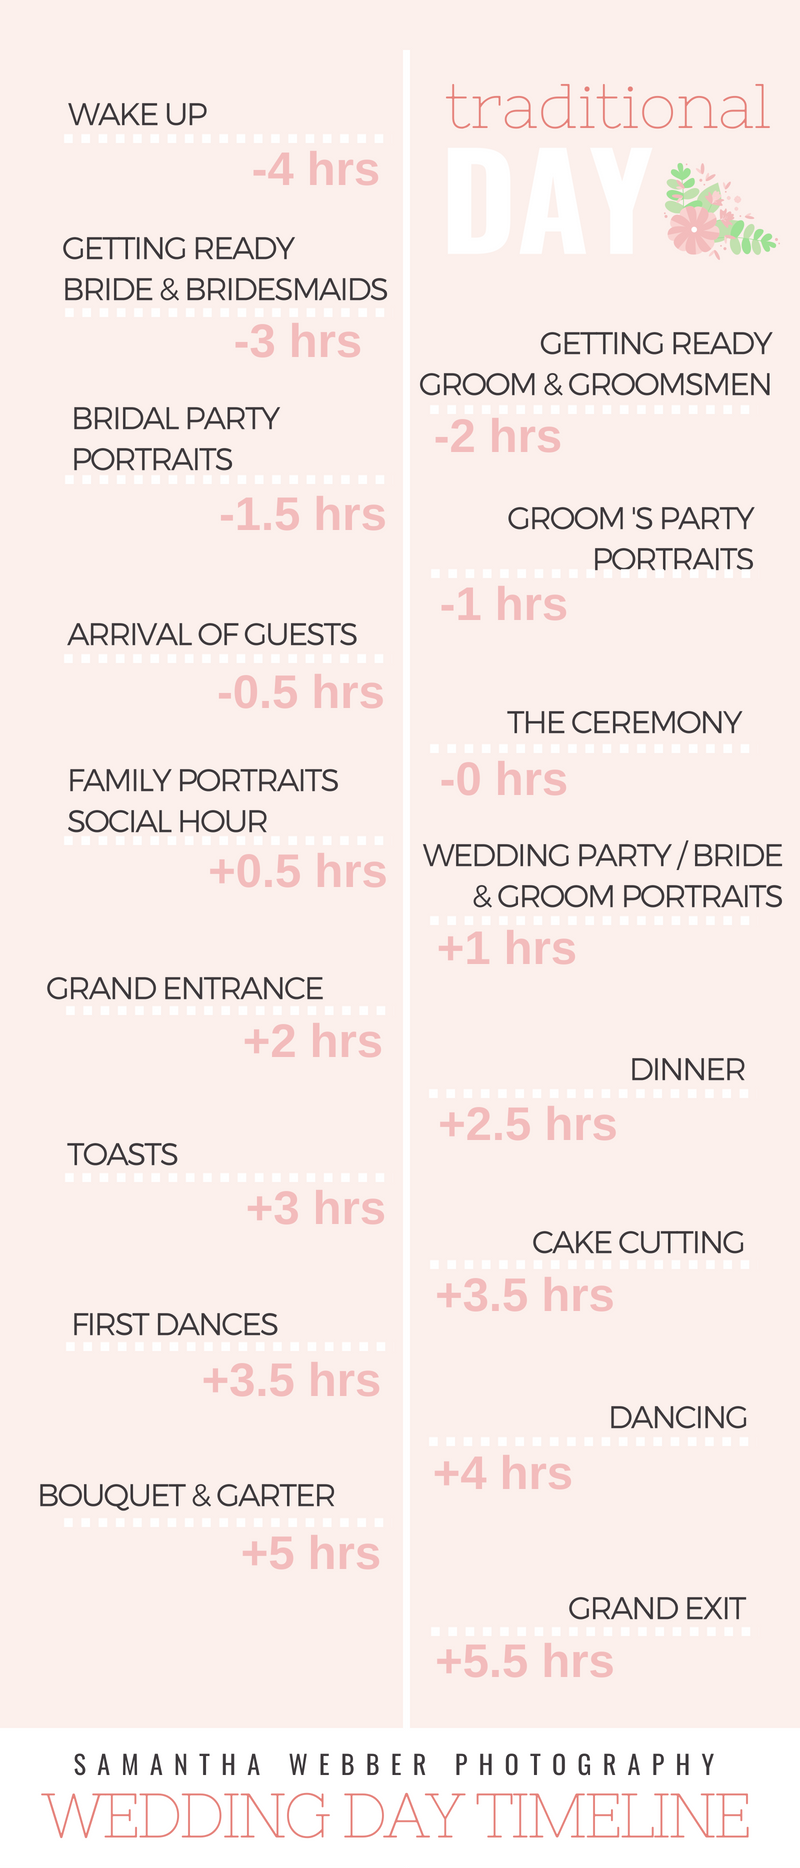 Traditional wedding timeline